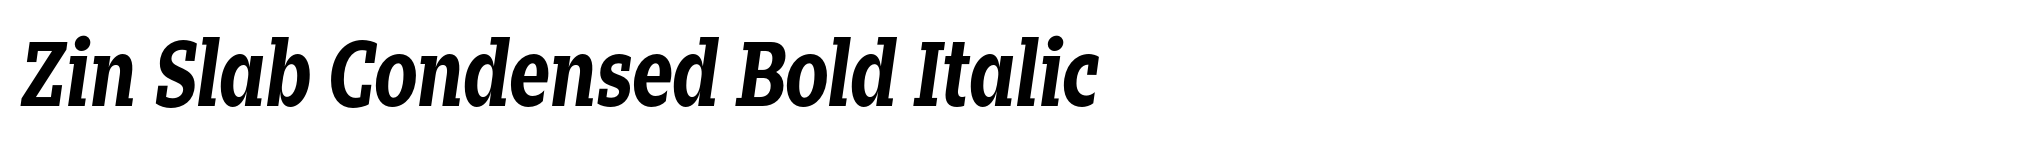 Zin Slab Condensed Bold Italic image